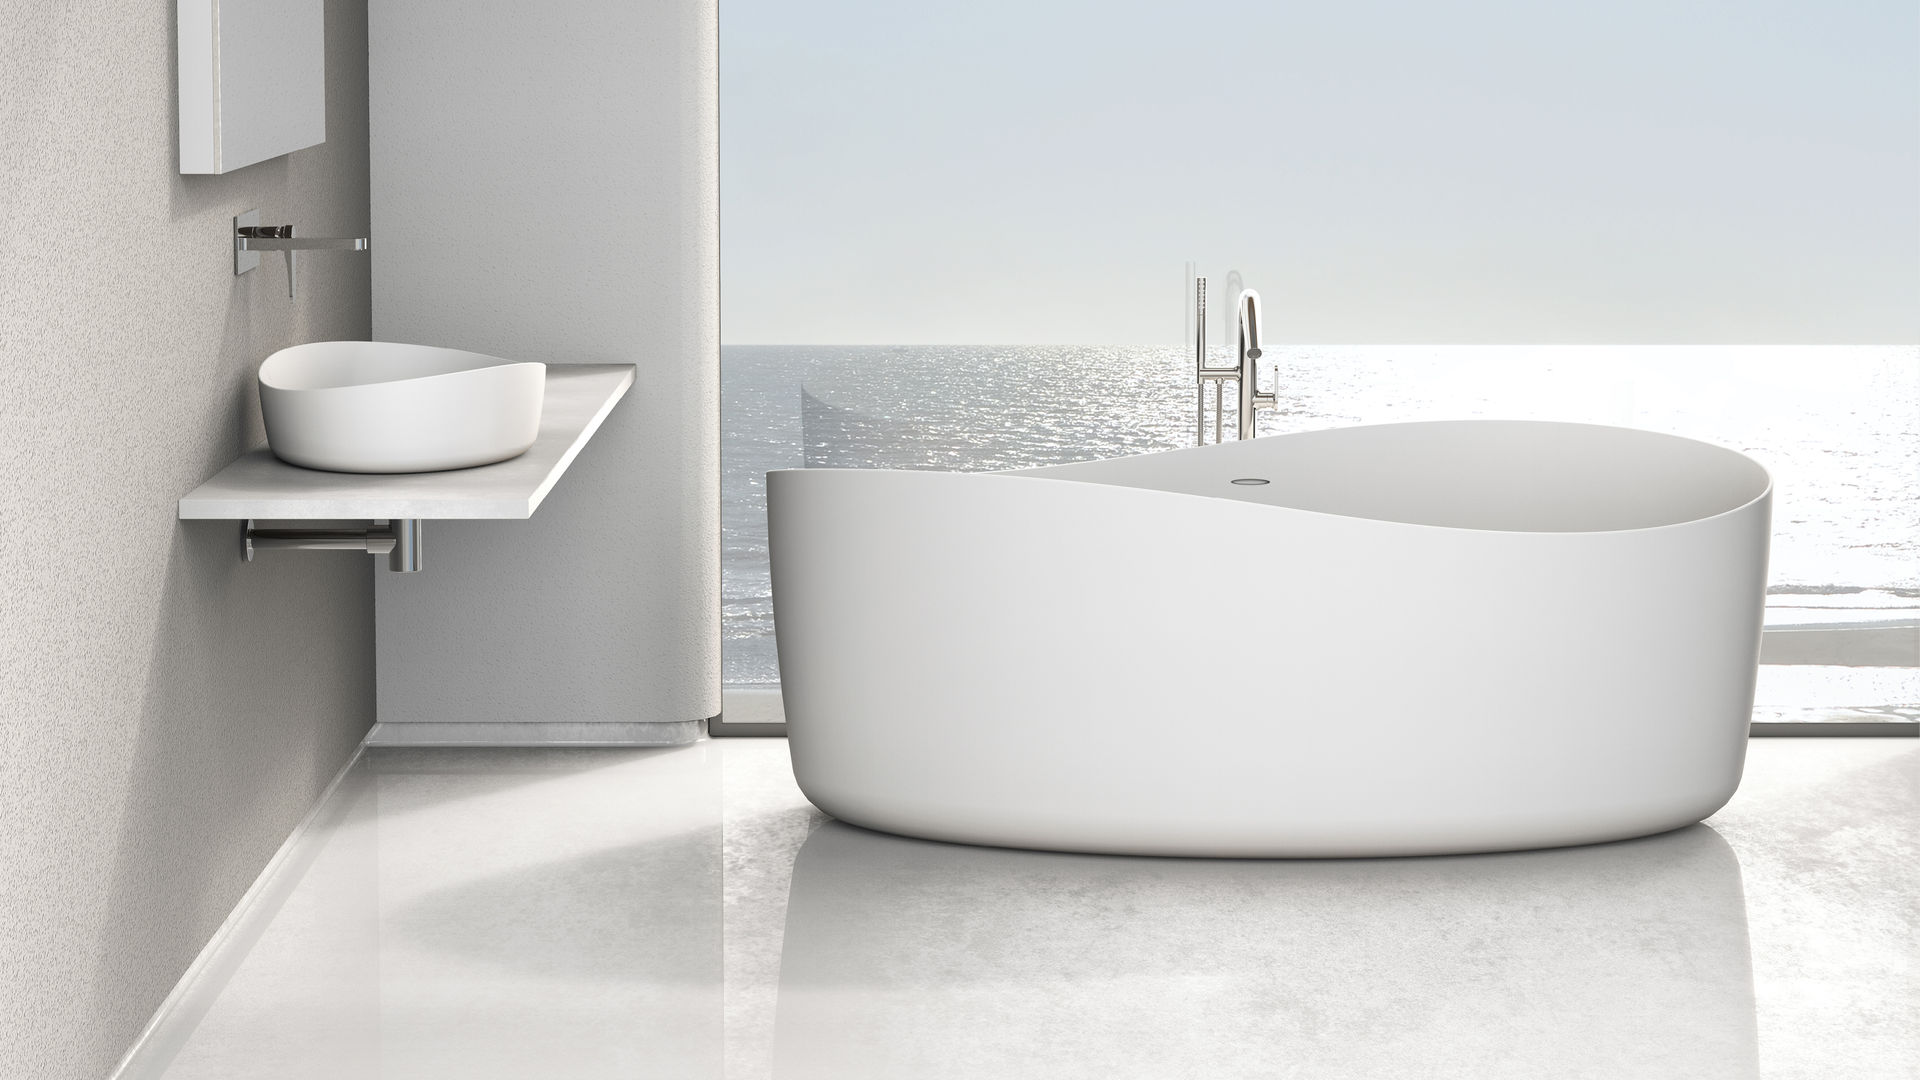 Solidharmony - Bathtub and Washbasin Design Series, Markus Kurkowski Industrie Design Markus Kurkowski Industrie Design ห้องน้ำ อ่างอาบน้ำ ฝักบัวอาบน้ำ